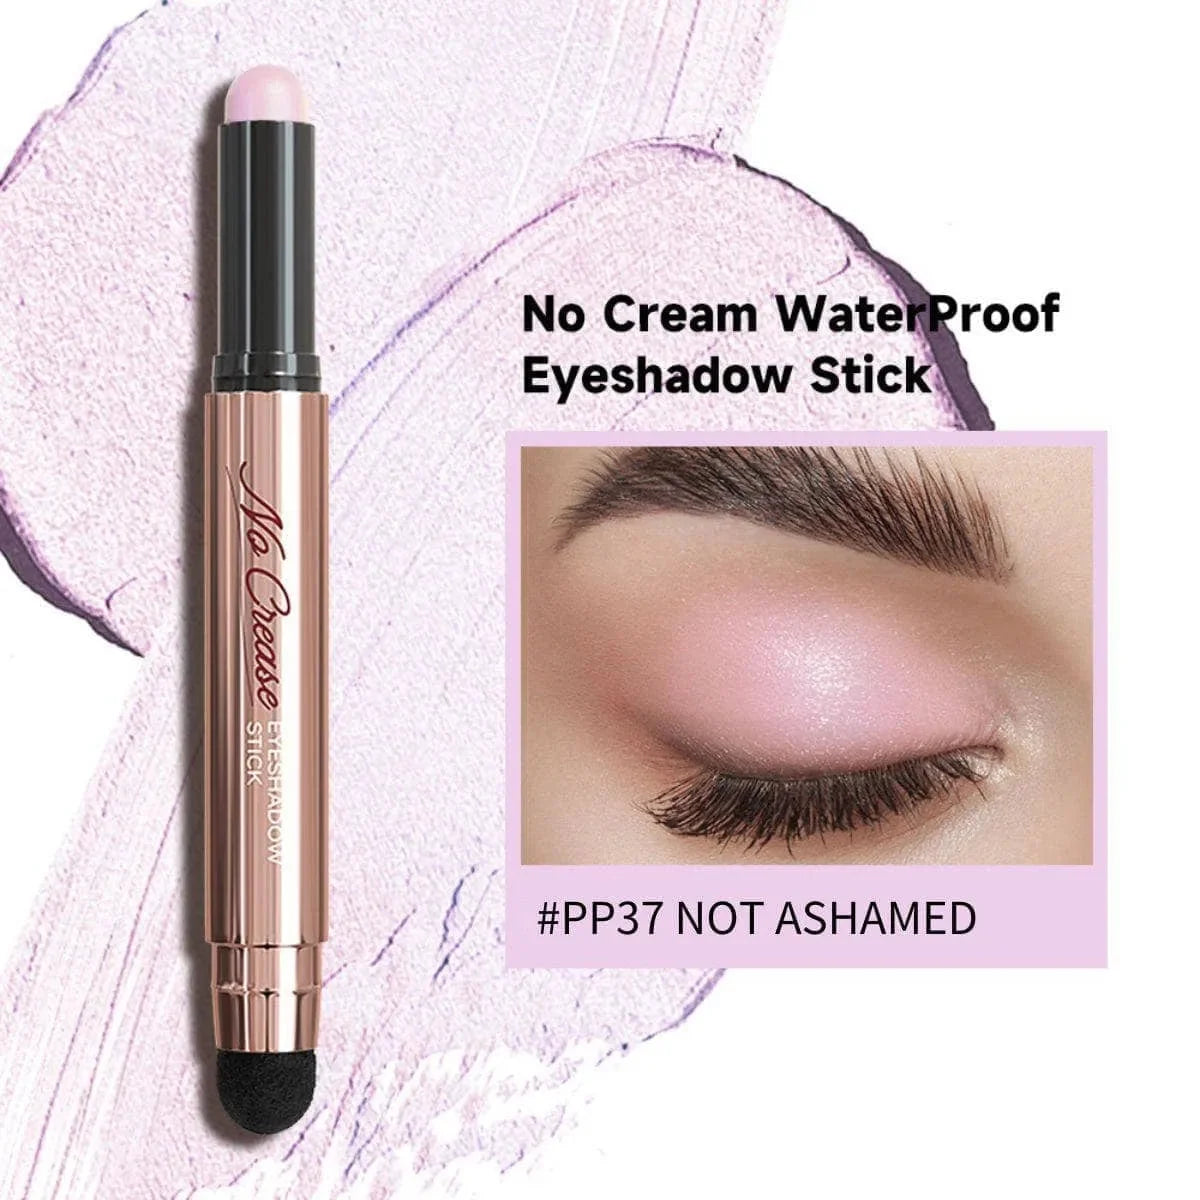 No Crease WaterProof Eyeshadow Stick